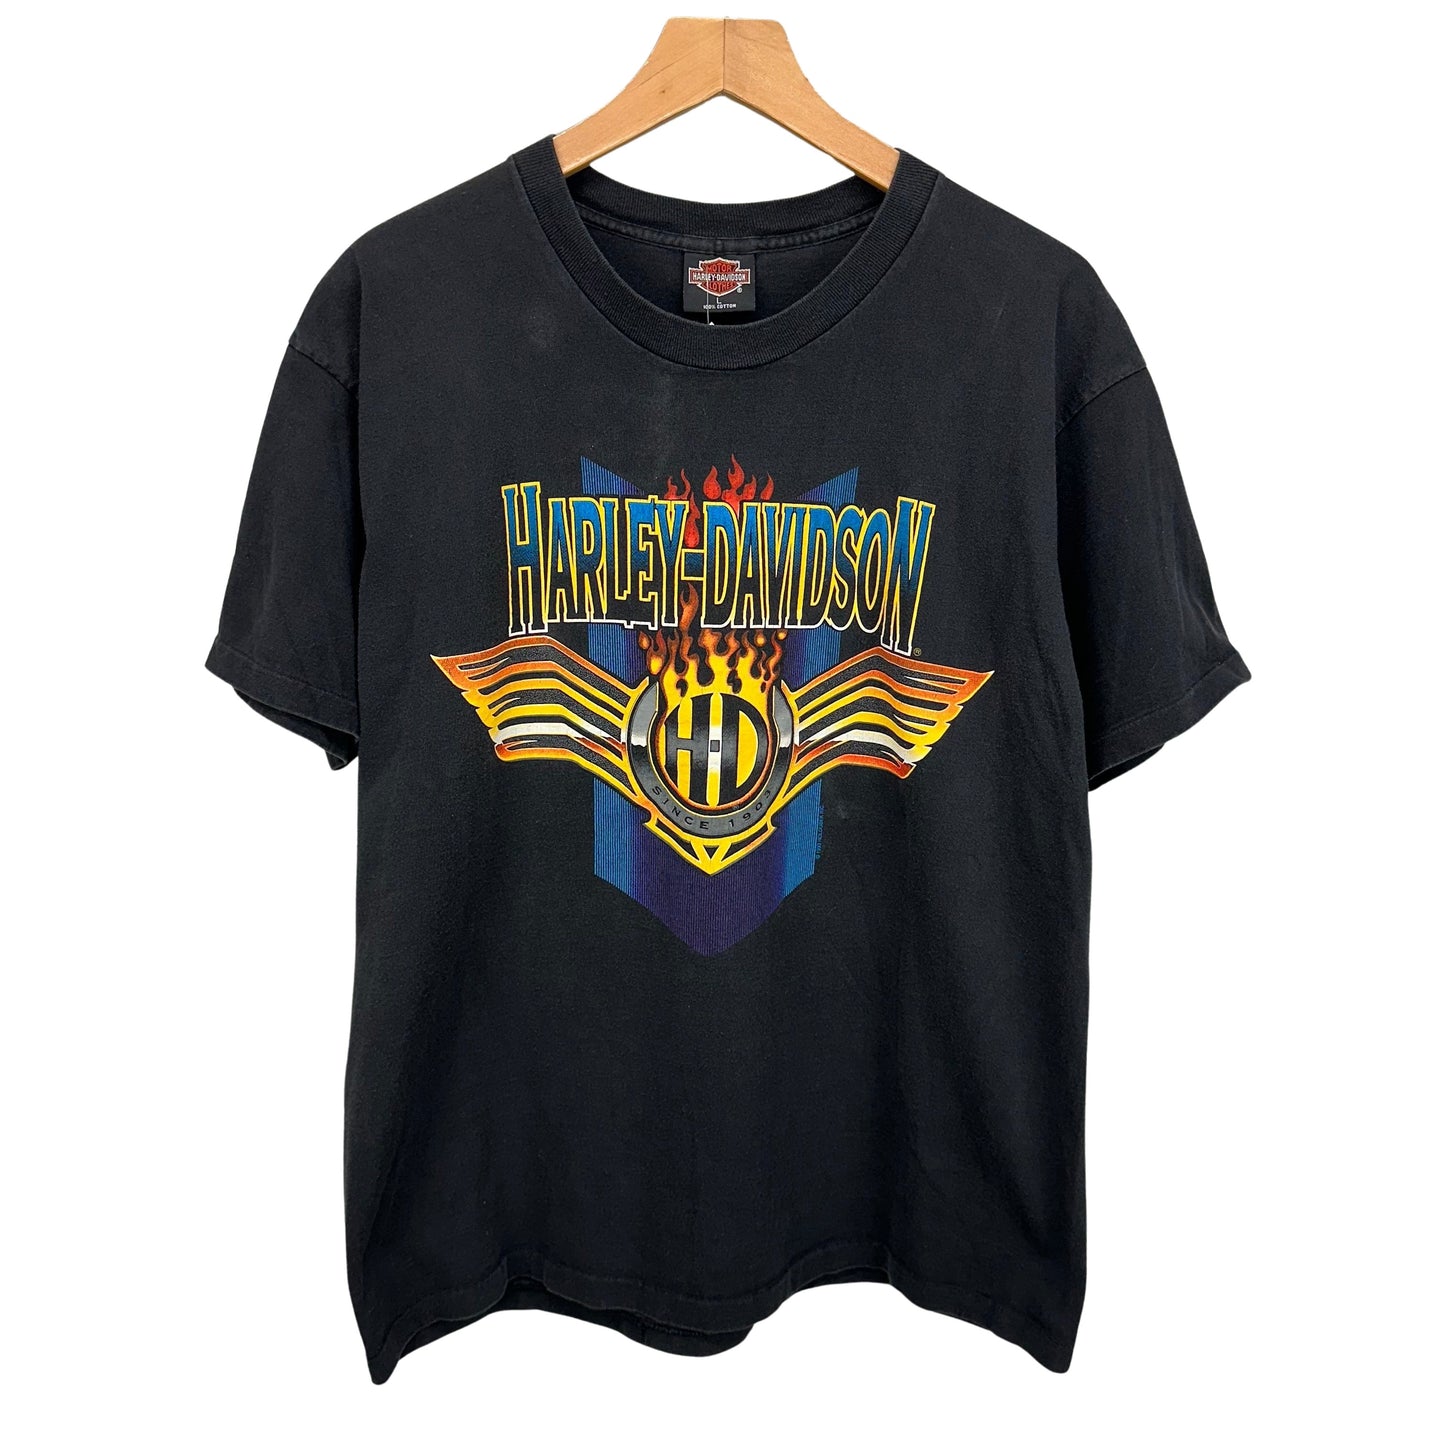 1993 Harley Davidson Florida Shirt Large